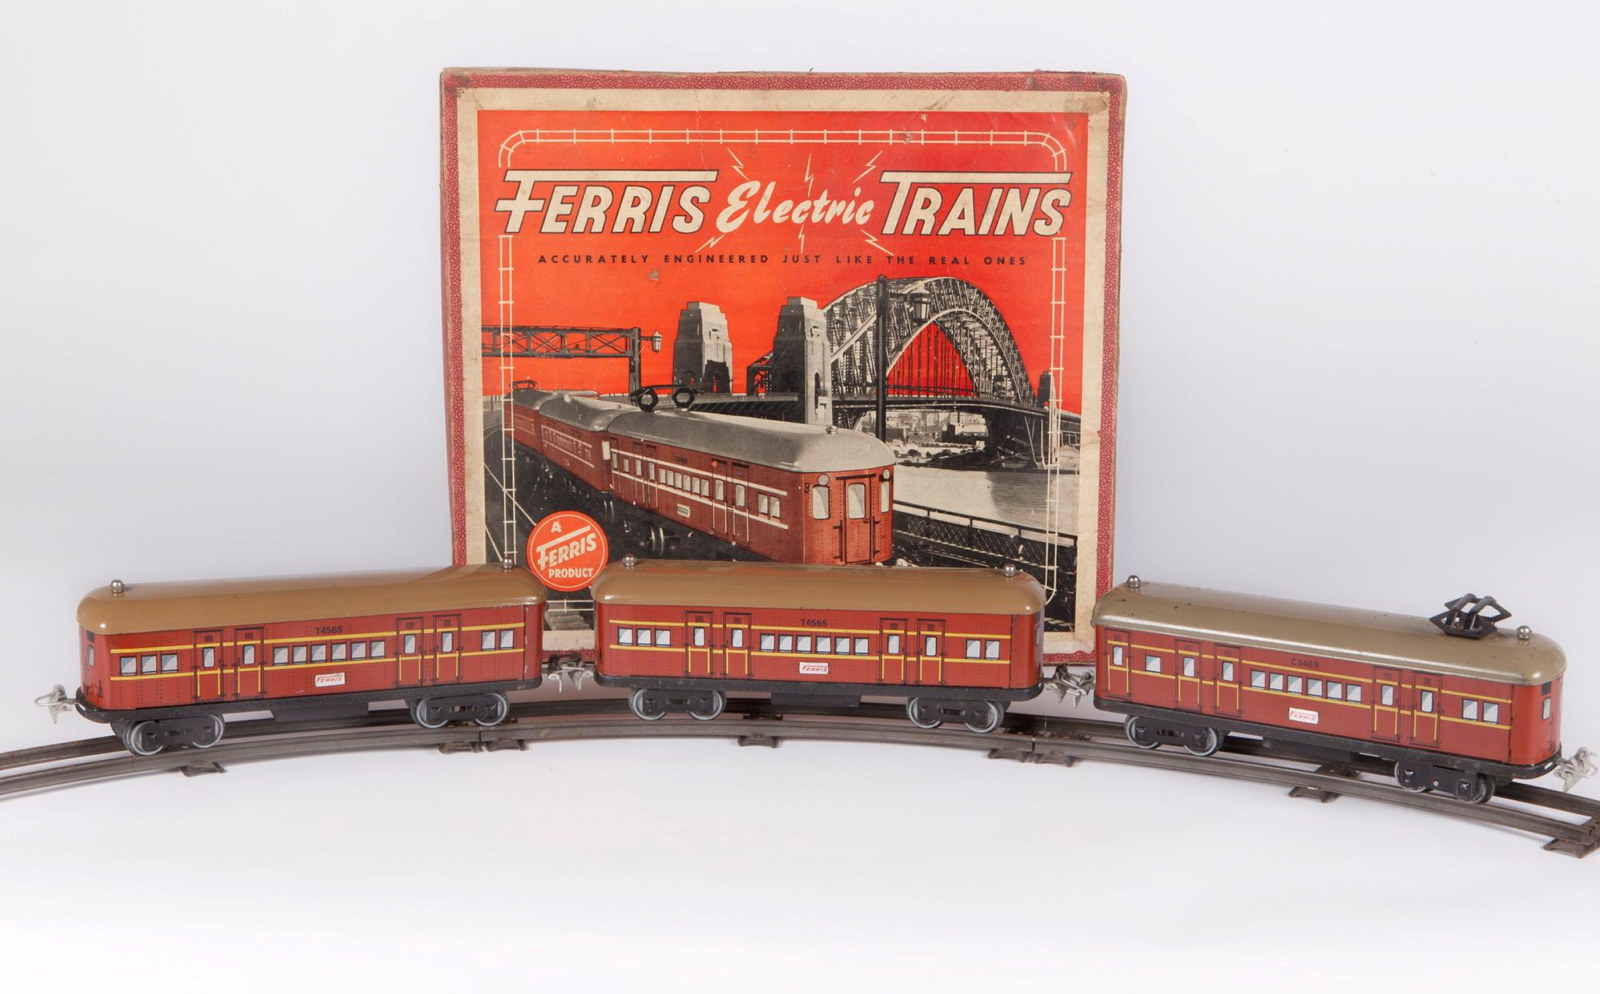 Ferris Electric Trains